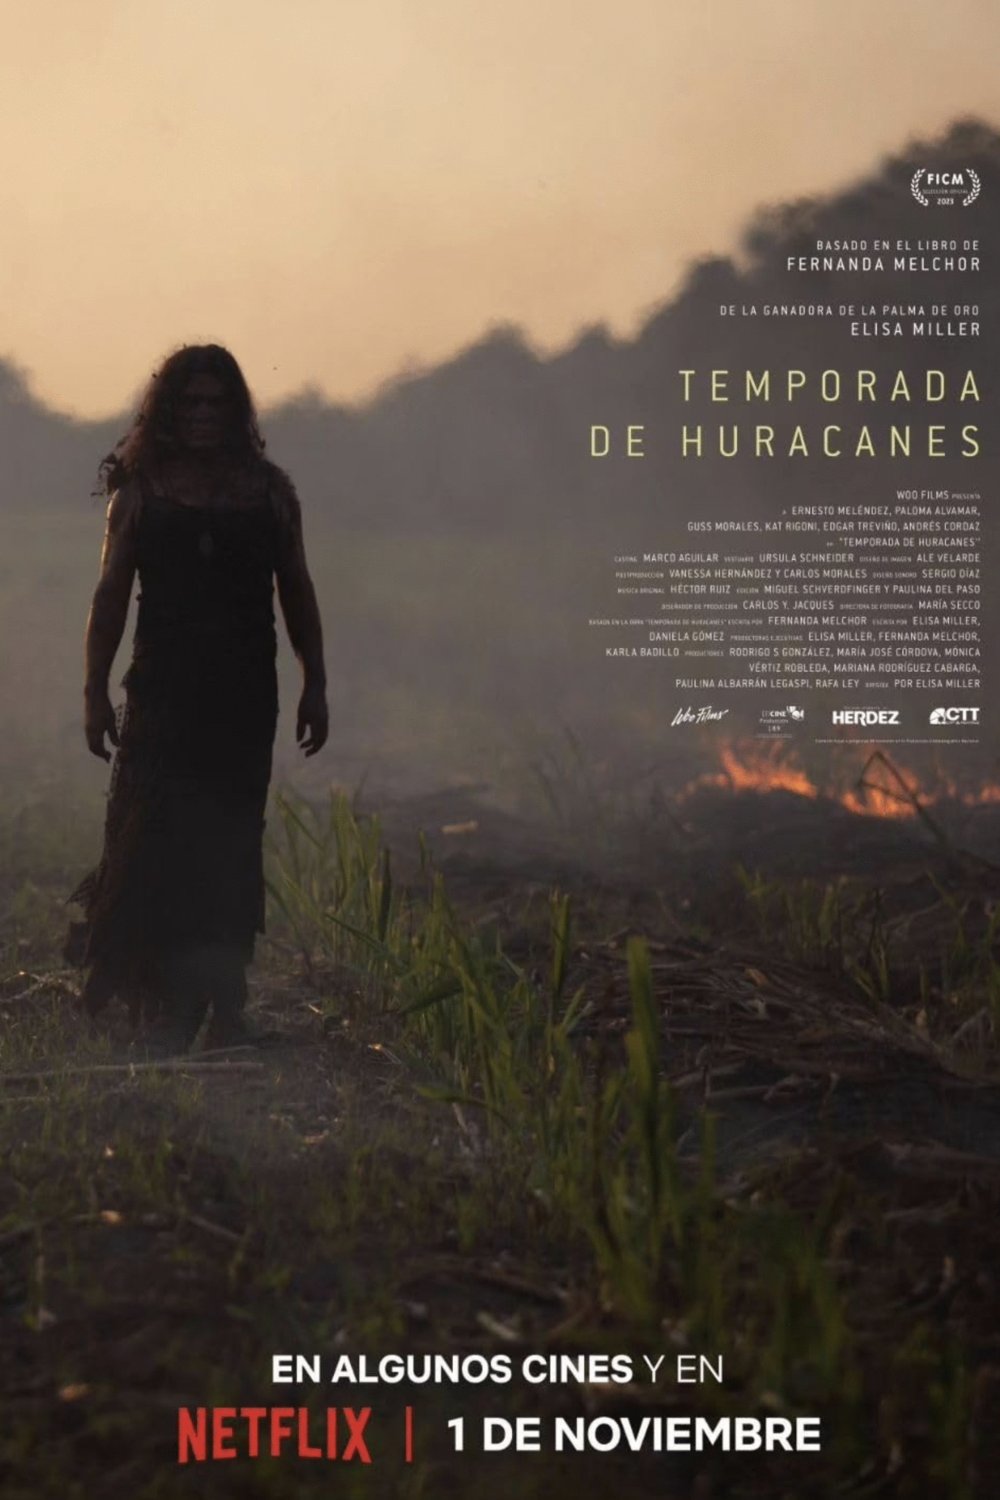 Spanish poster of the movie Temporada de huracanes